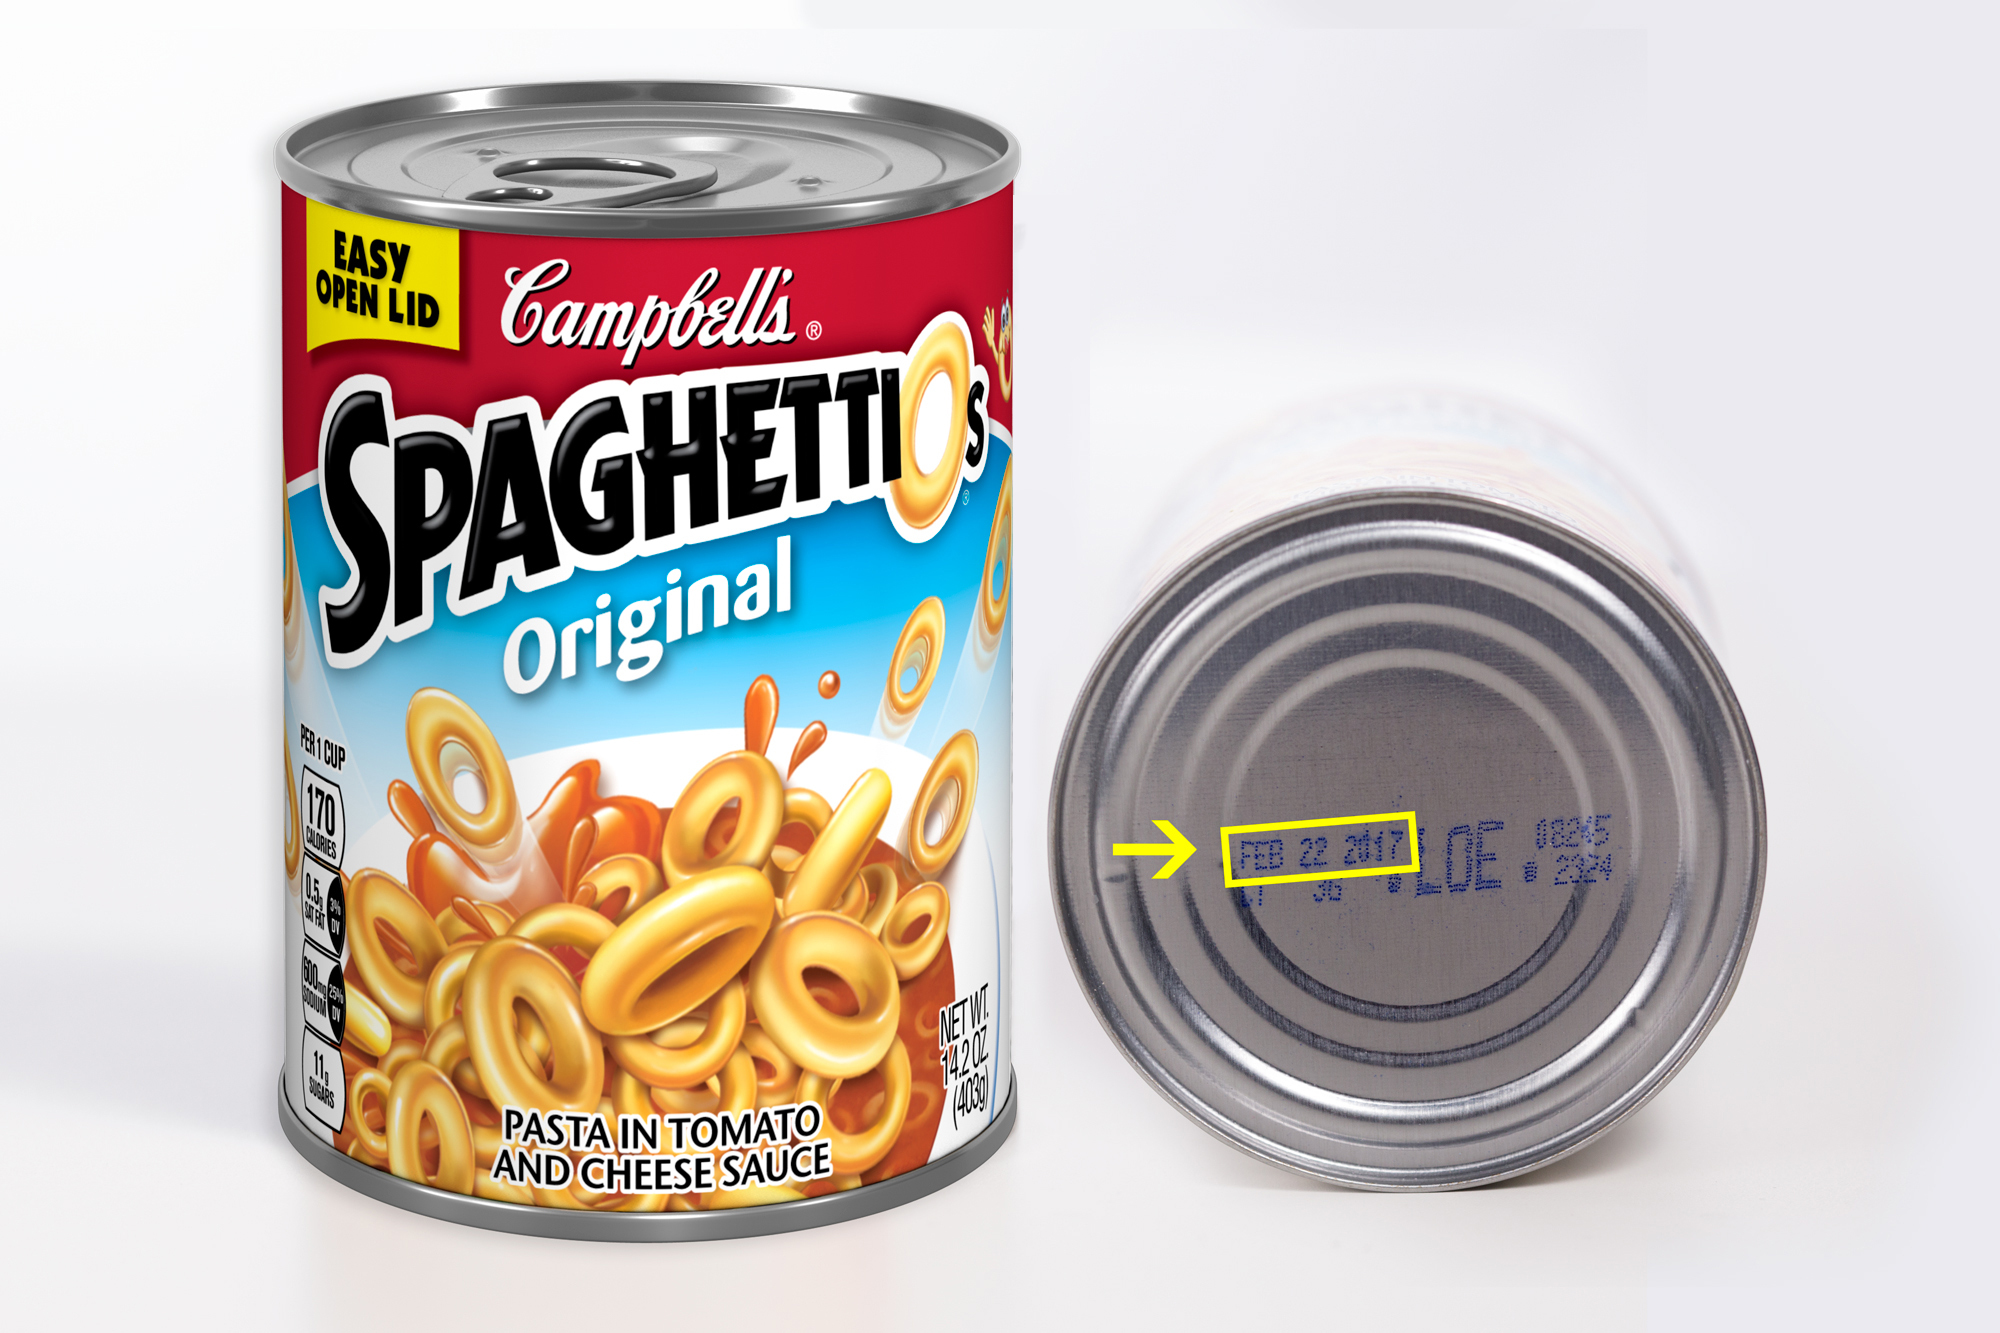 SpaghettiOs recalled